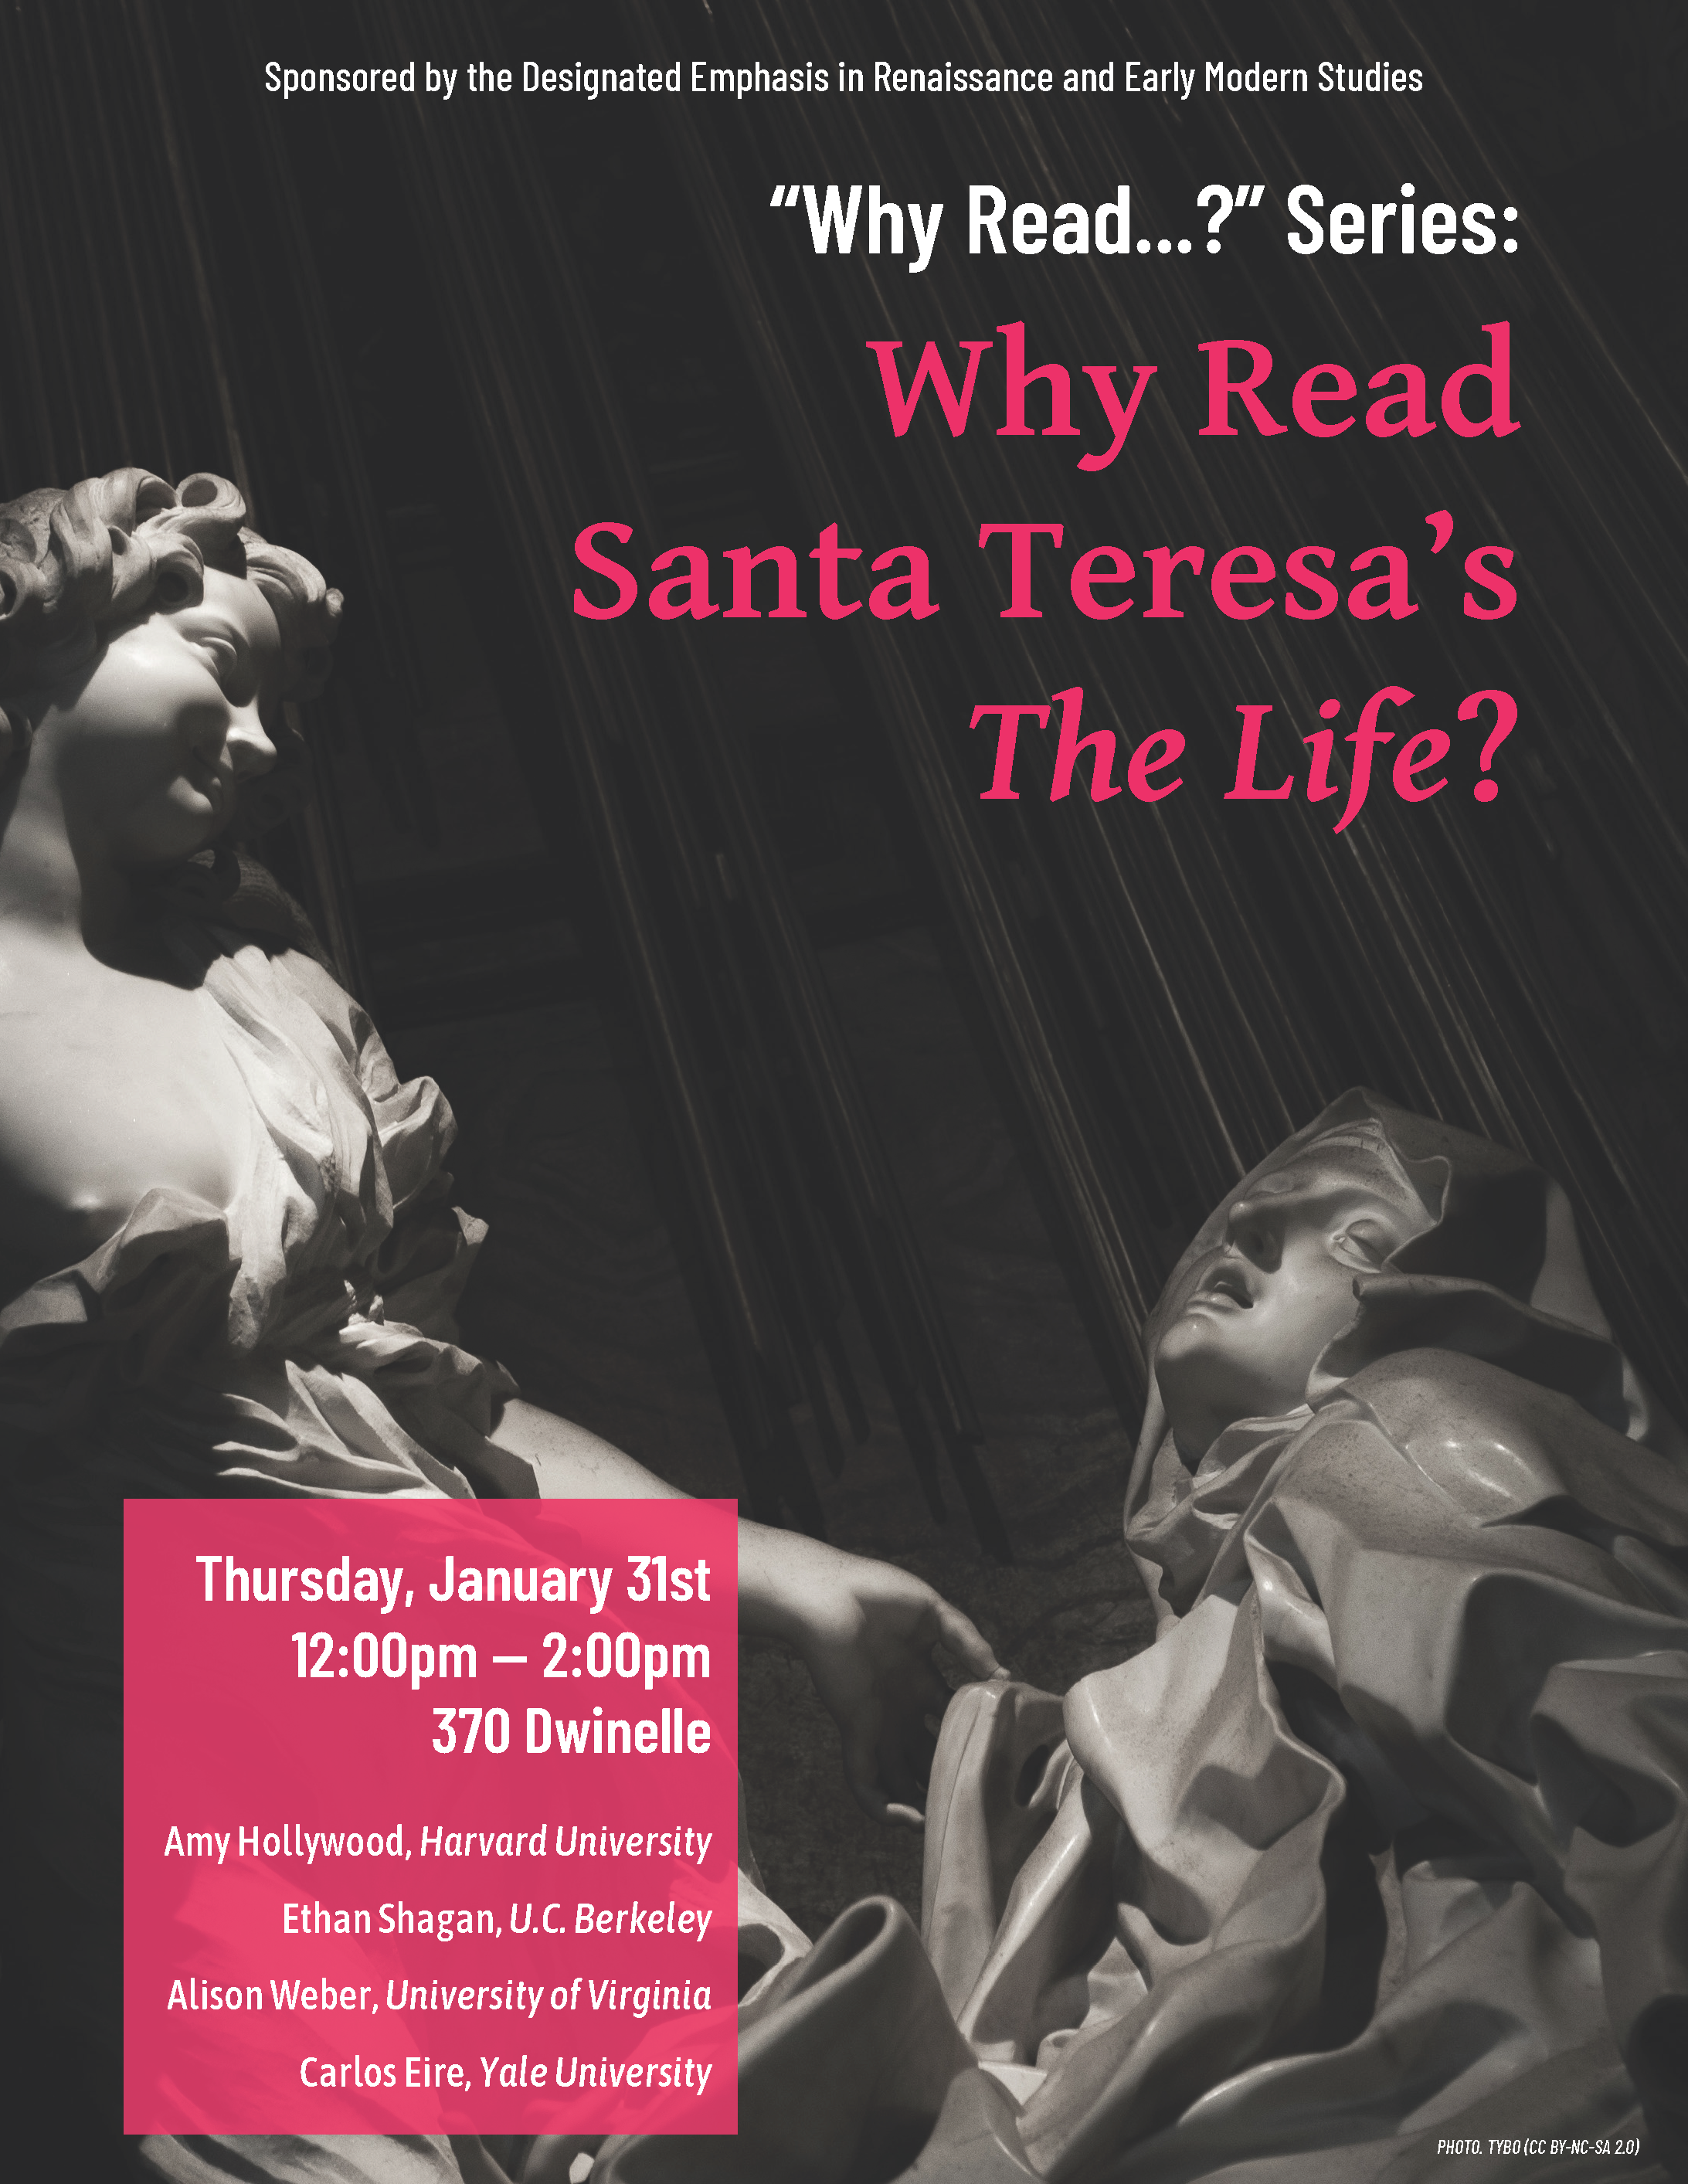  Why Read Santa Teresa’s The Life